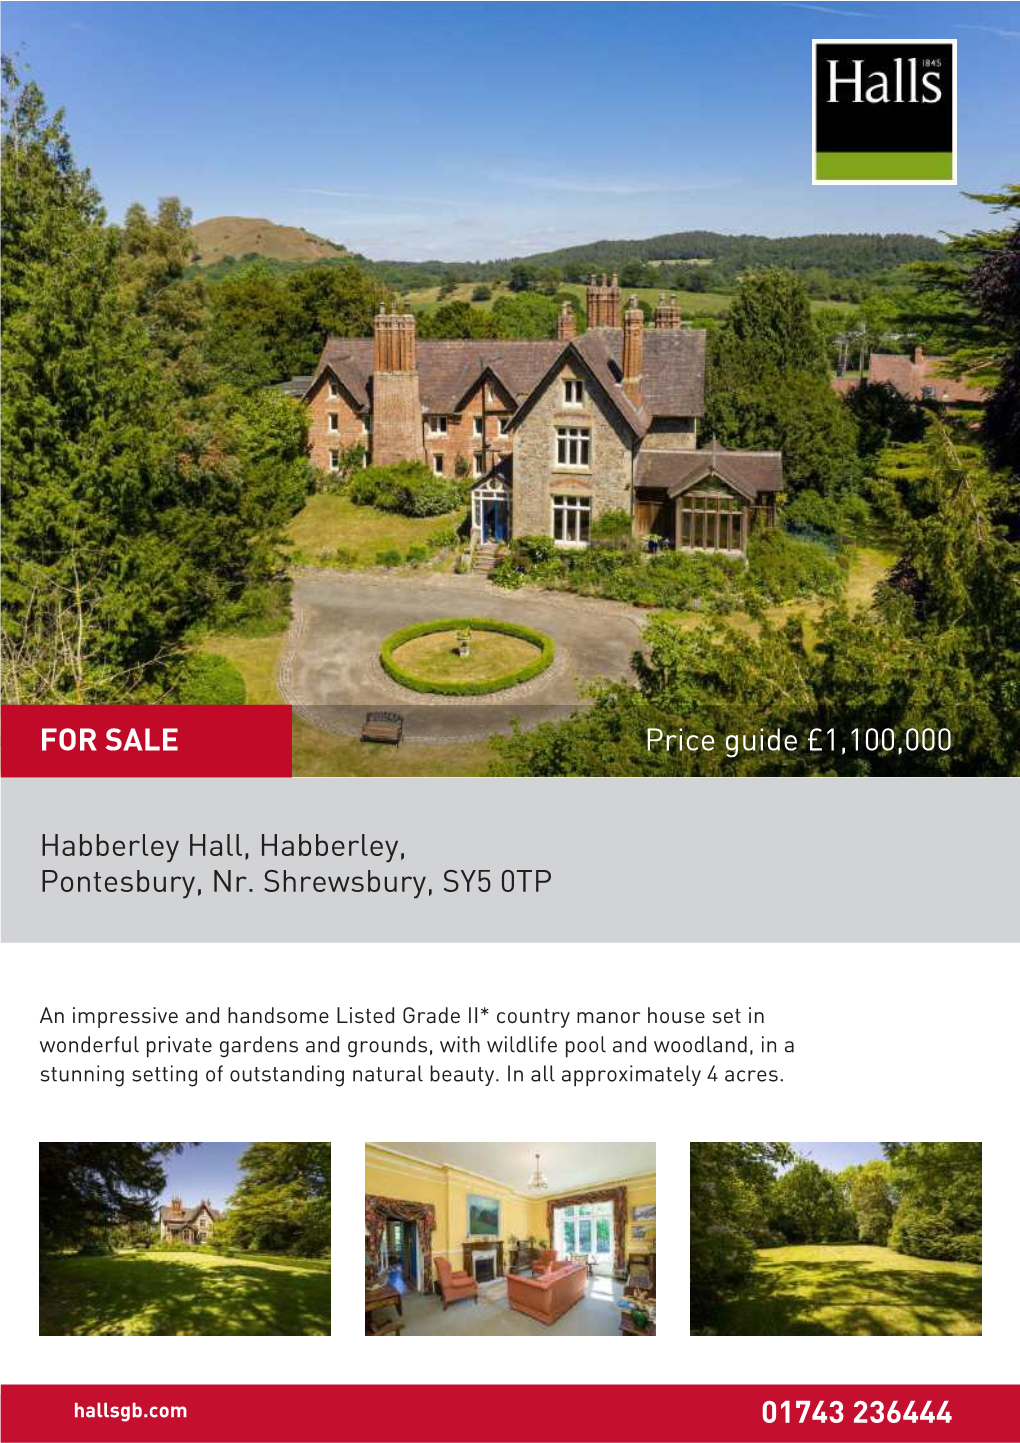 Habberley Hall, Habberley, Pontesbury, Nr. Shrewsbury, SY5 0TP